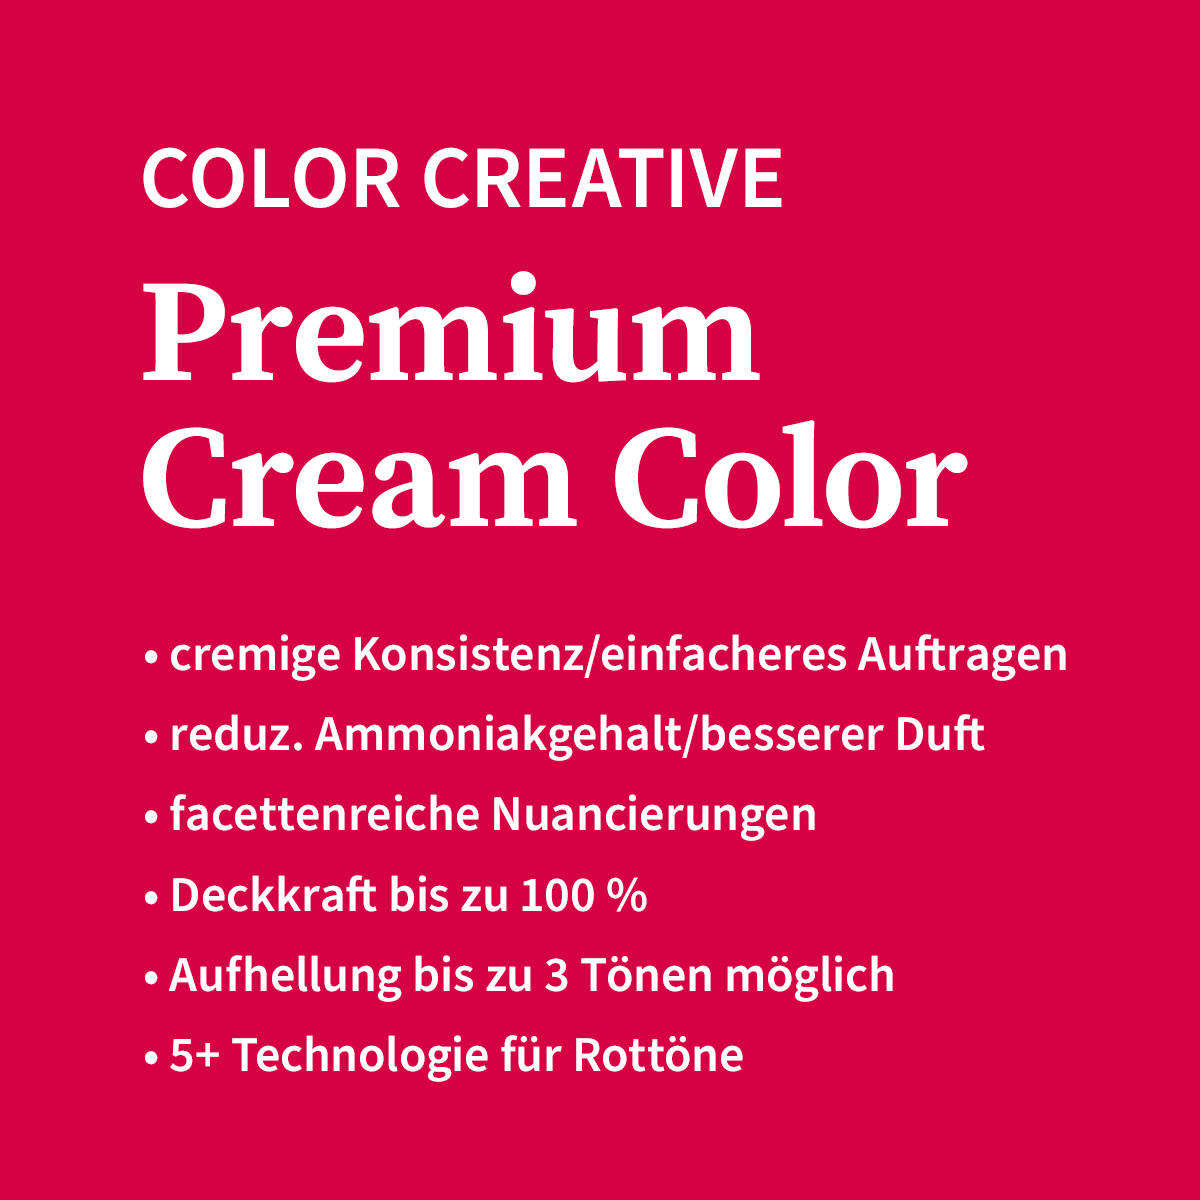 Basler Color Creative Premium Cream Color 11/1 hell lichtblond asch, Tube 60 ml - 4